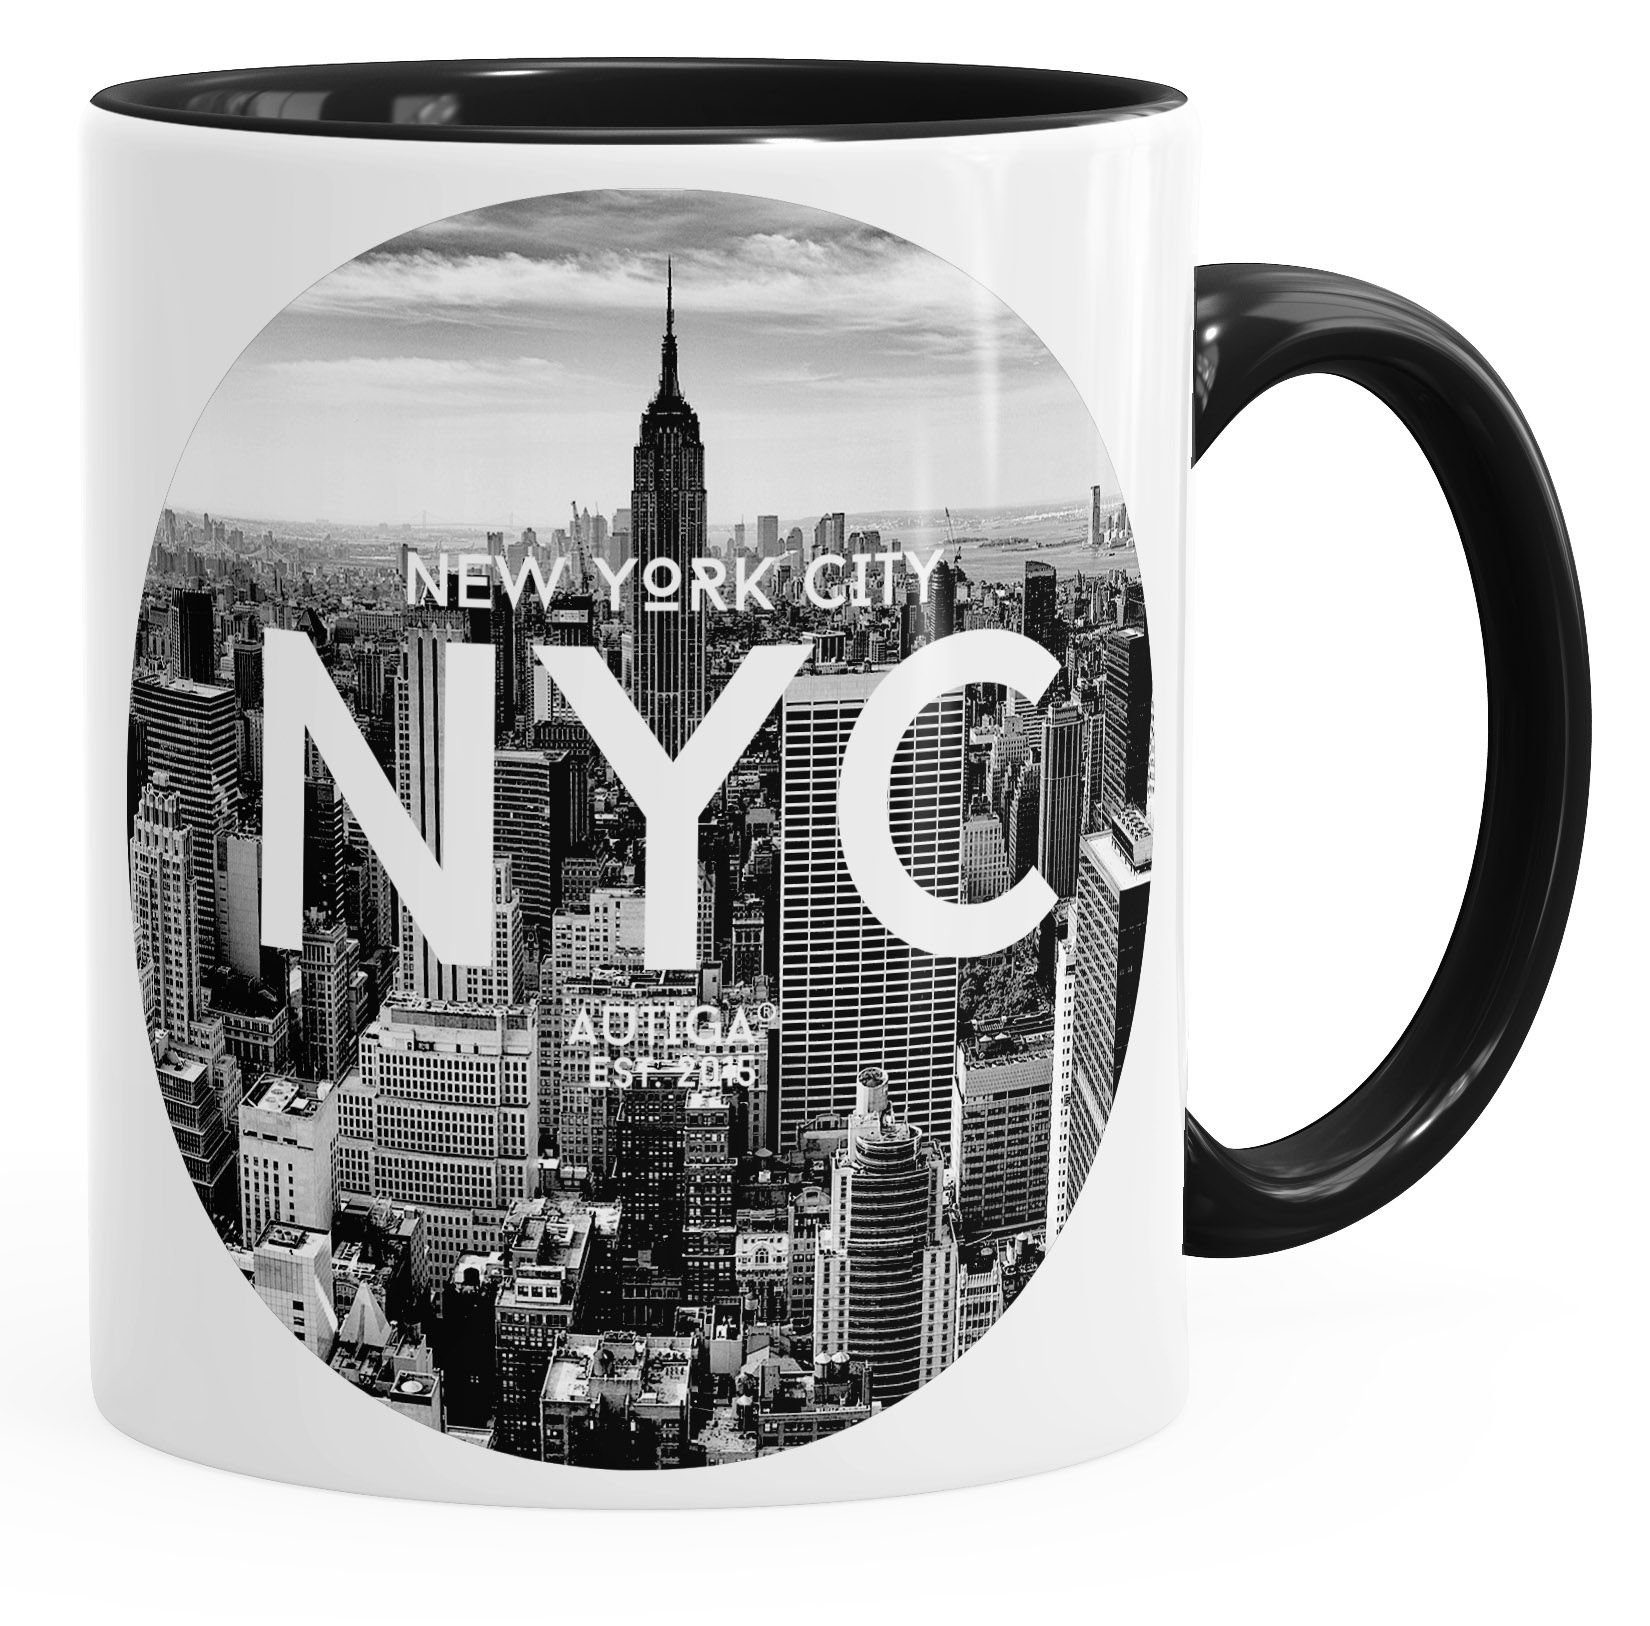 Autiga Tasse Tasse mit New York City Fotoprint Manhattan Rockefeller Center NYC Autiga®, Keramik